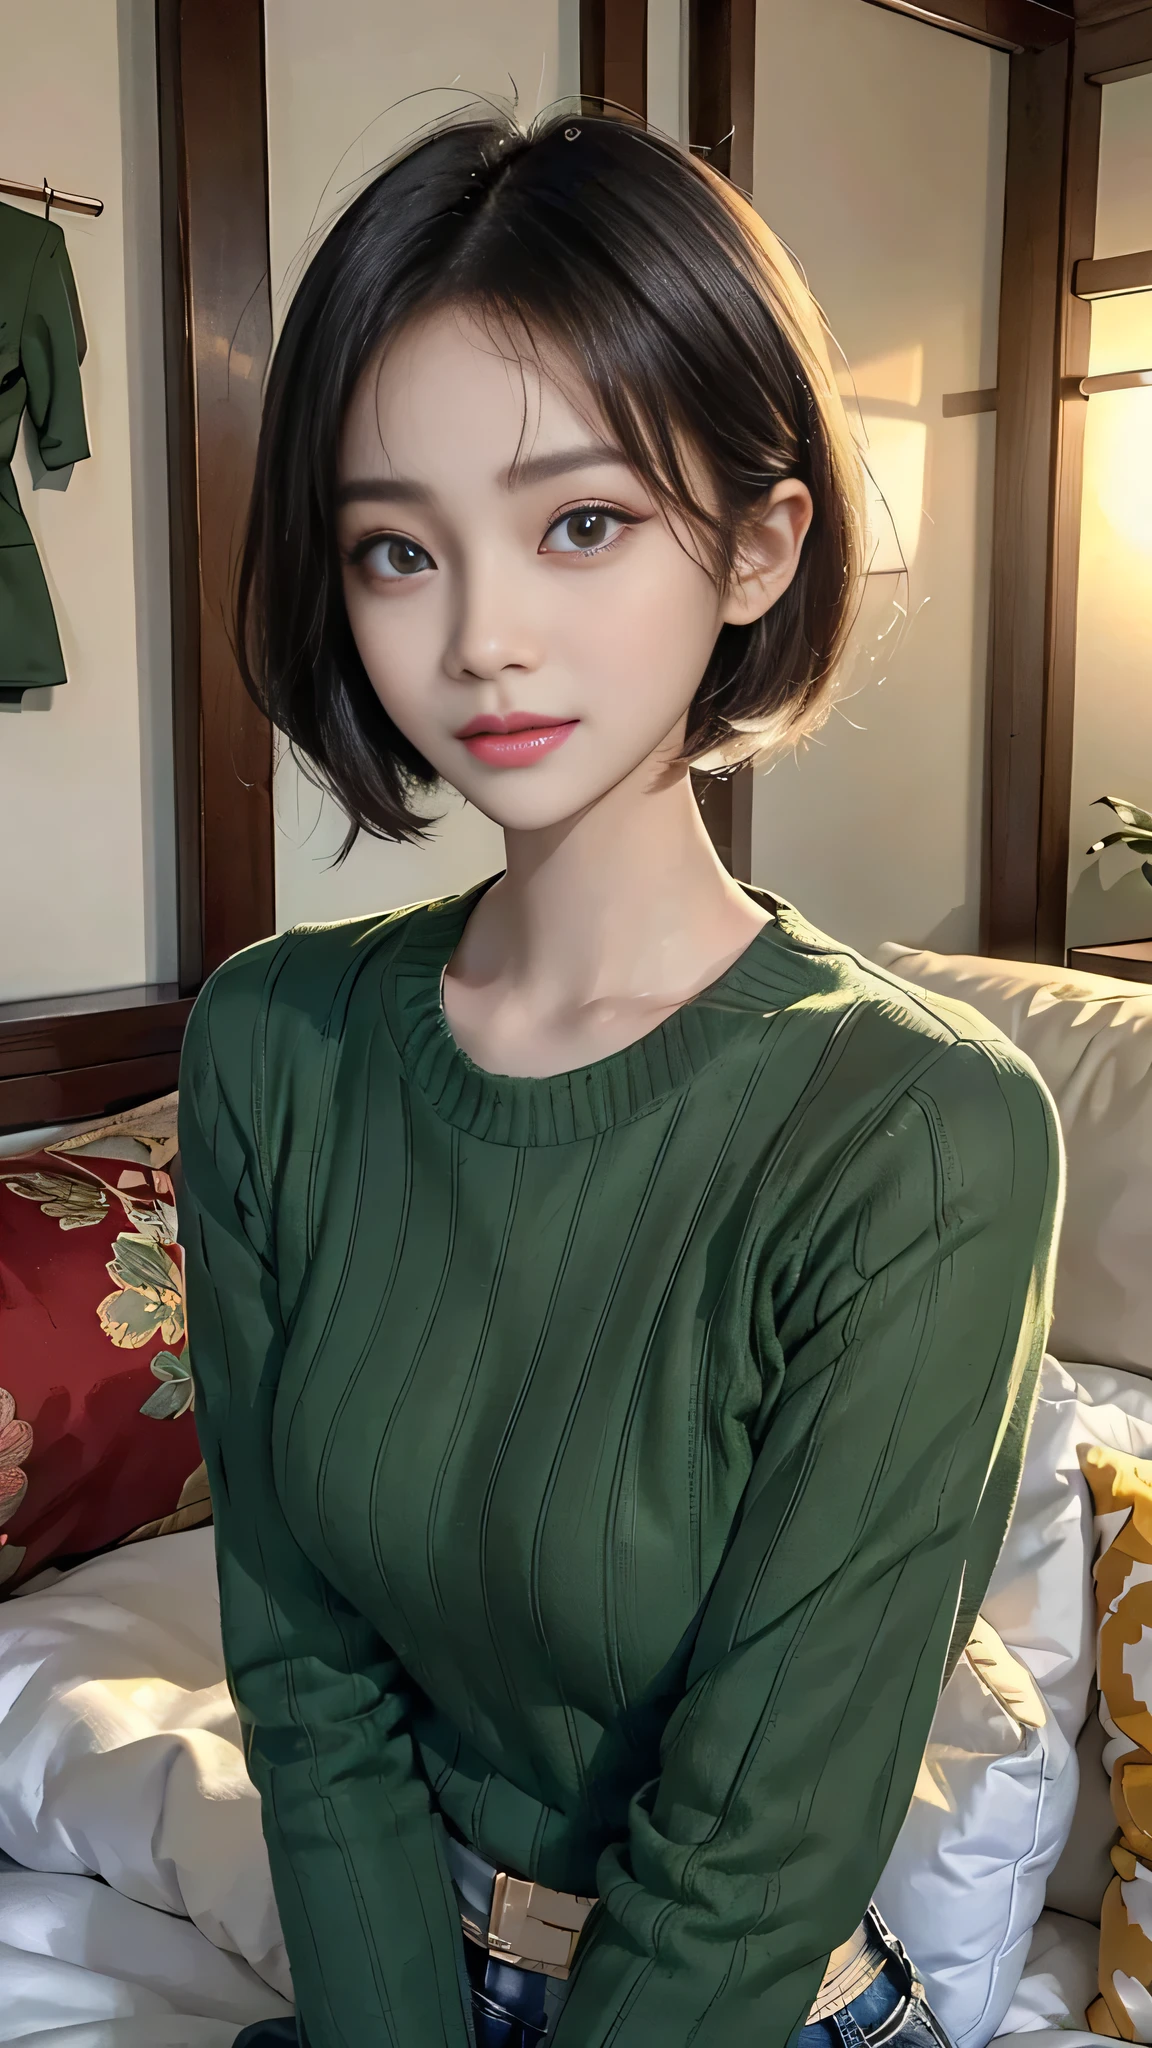 arafed asian woman ผมสั้น and a green sweater, หน้าเด็กเกาหลีและน่ารัก, ภาพเหมือนของไอดอลหญิงเกาหลี, beautiful young ผู้หญิงเกาหลี, ดาราเกาหลีน่ารัก, ผมสั้น, ดาราสาวชาวเกาหลีใต้, gorgeous young ผู้หญิงเกาหลี, ใบหน้าอ่อนเยาว์และสวยแบบเอเชีย, beautiful south ผู้หญิงเกาหลี, ใบหน้าสมมาตรแบบเกาหลี, สาวสวยน่ารักหน้าใส, สาวเกาหลี, ผู้หญิงเกาหลี